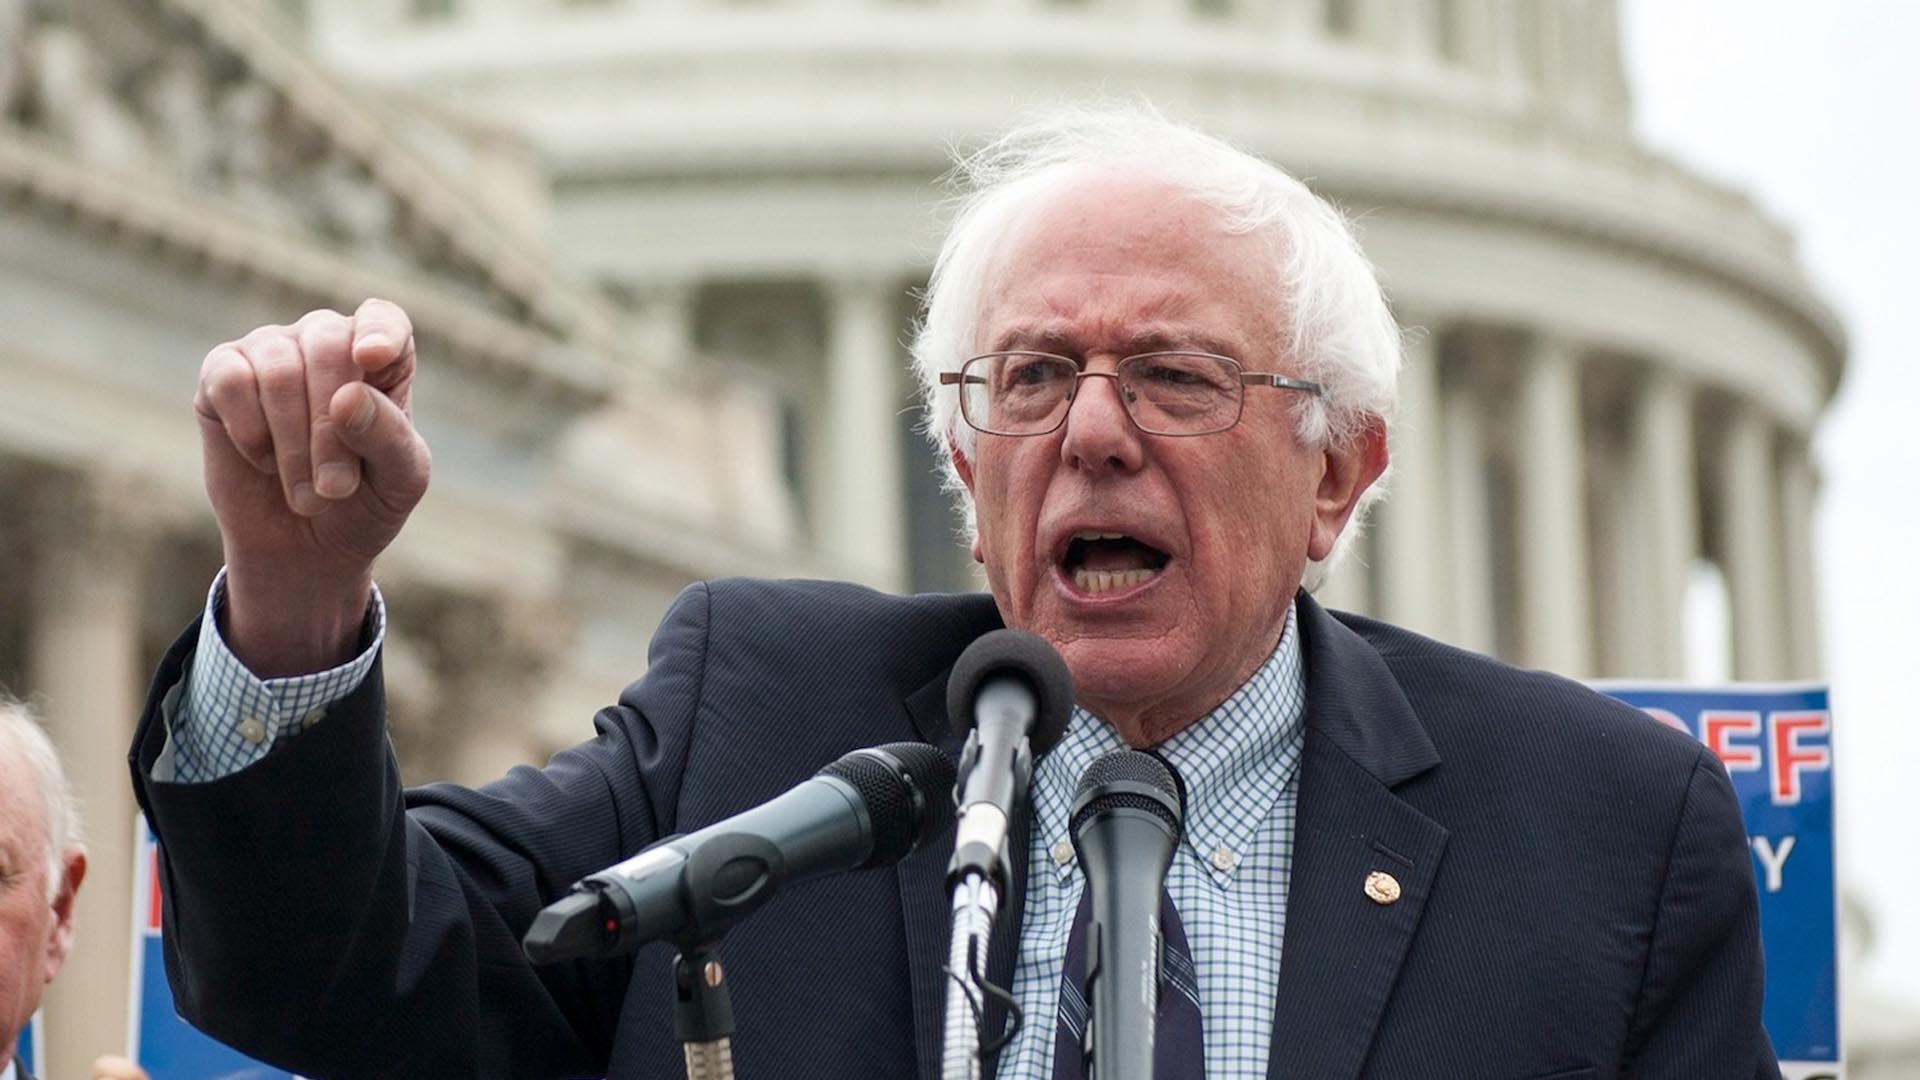 Il “rivoluzionario” sociale Bernie Sanders